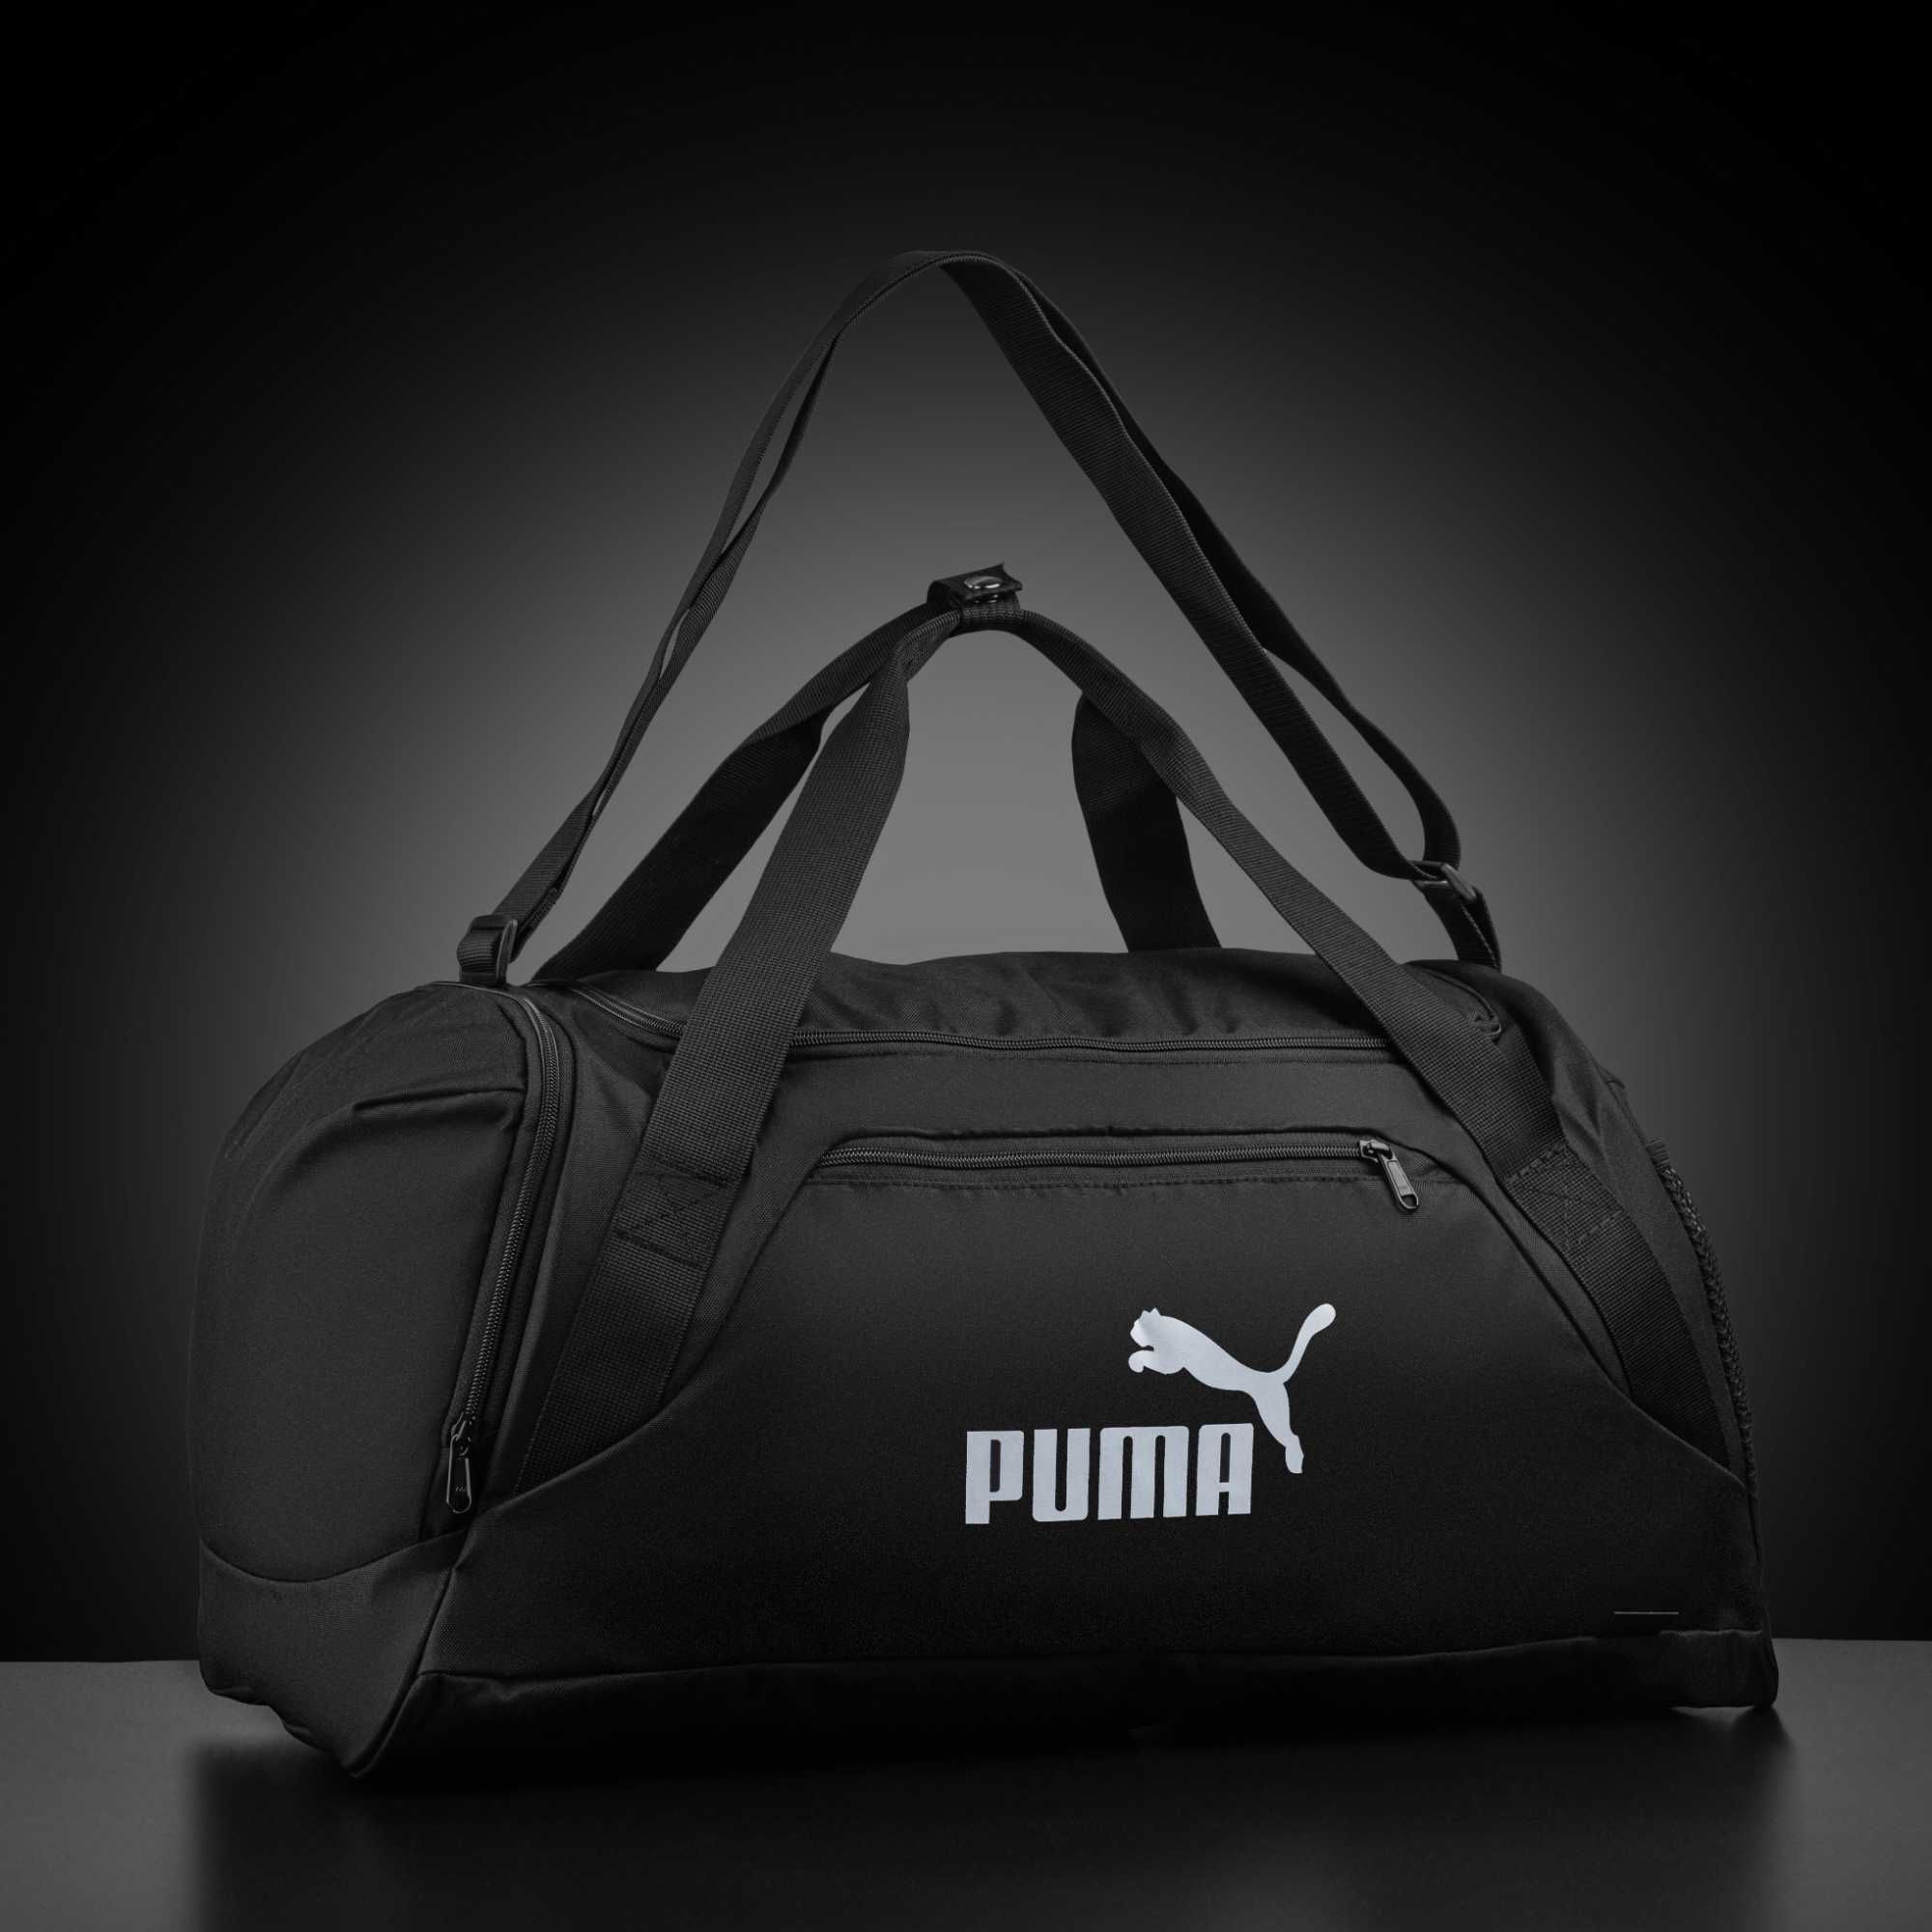 Сумка для фітнесу подорожі  Nike puma Найк пума Адідас